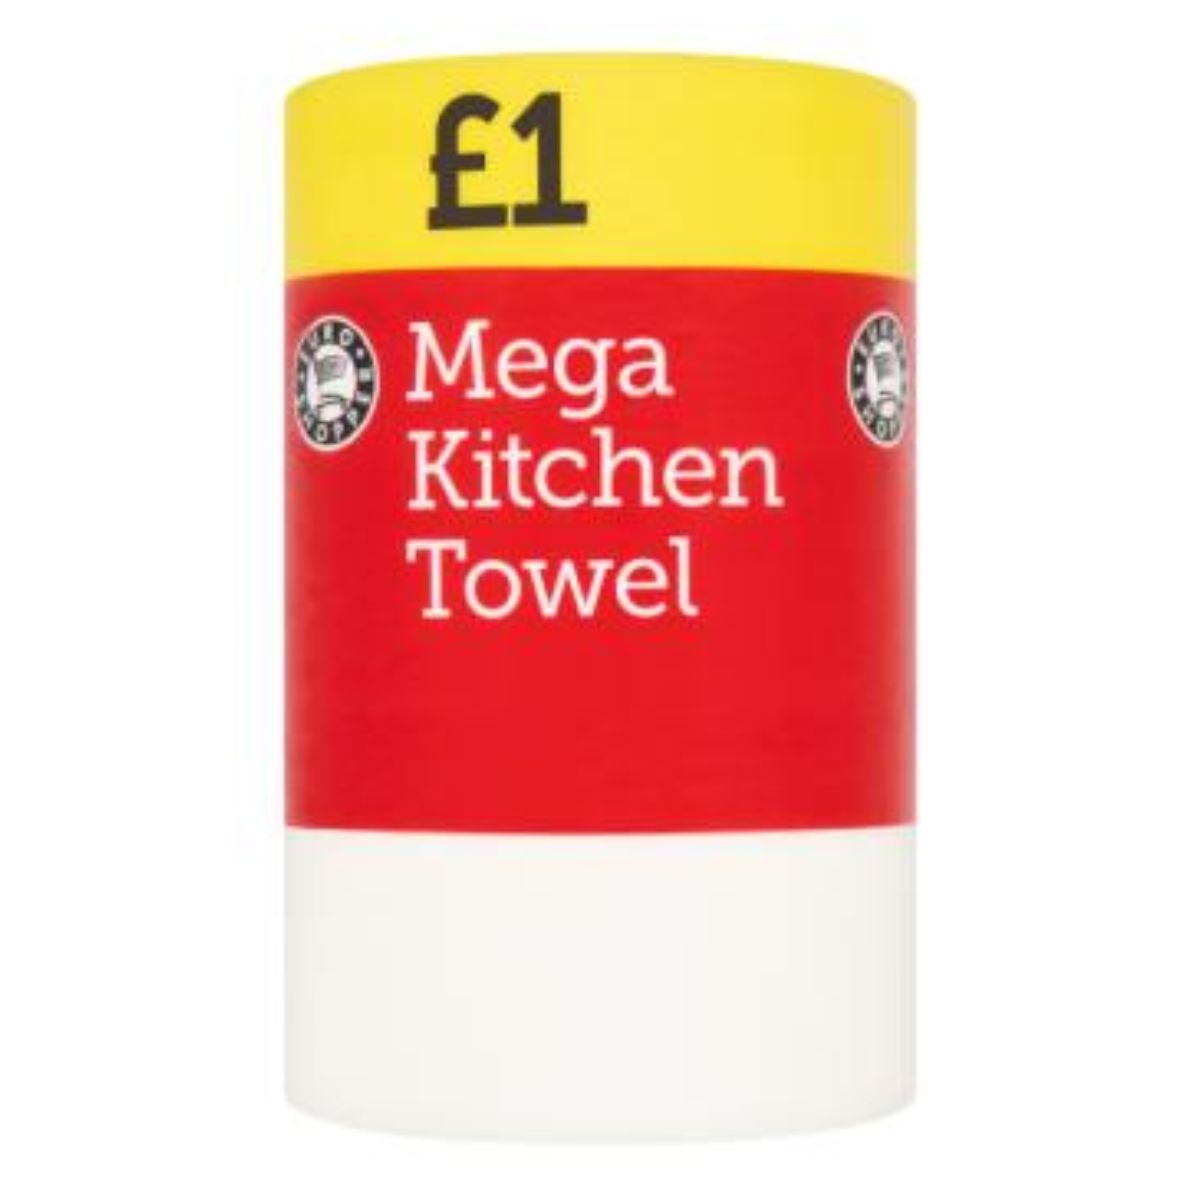 A Euro Shopper - Mega Kitchen Towel - 1pcs on a white background.